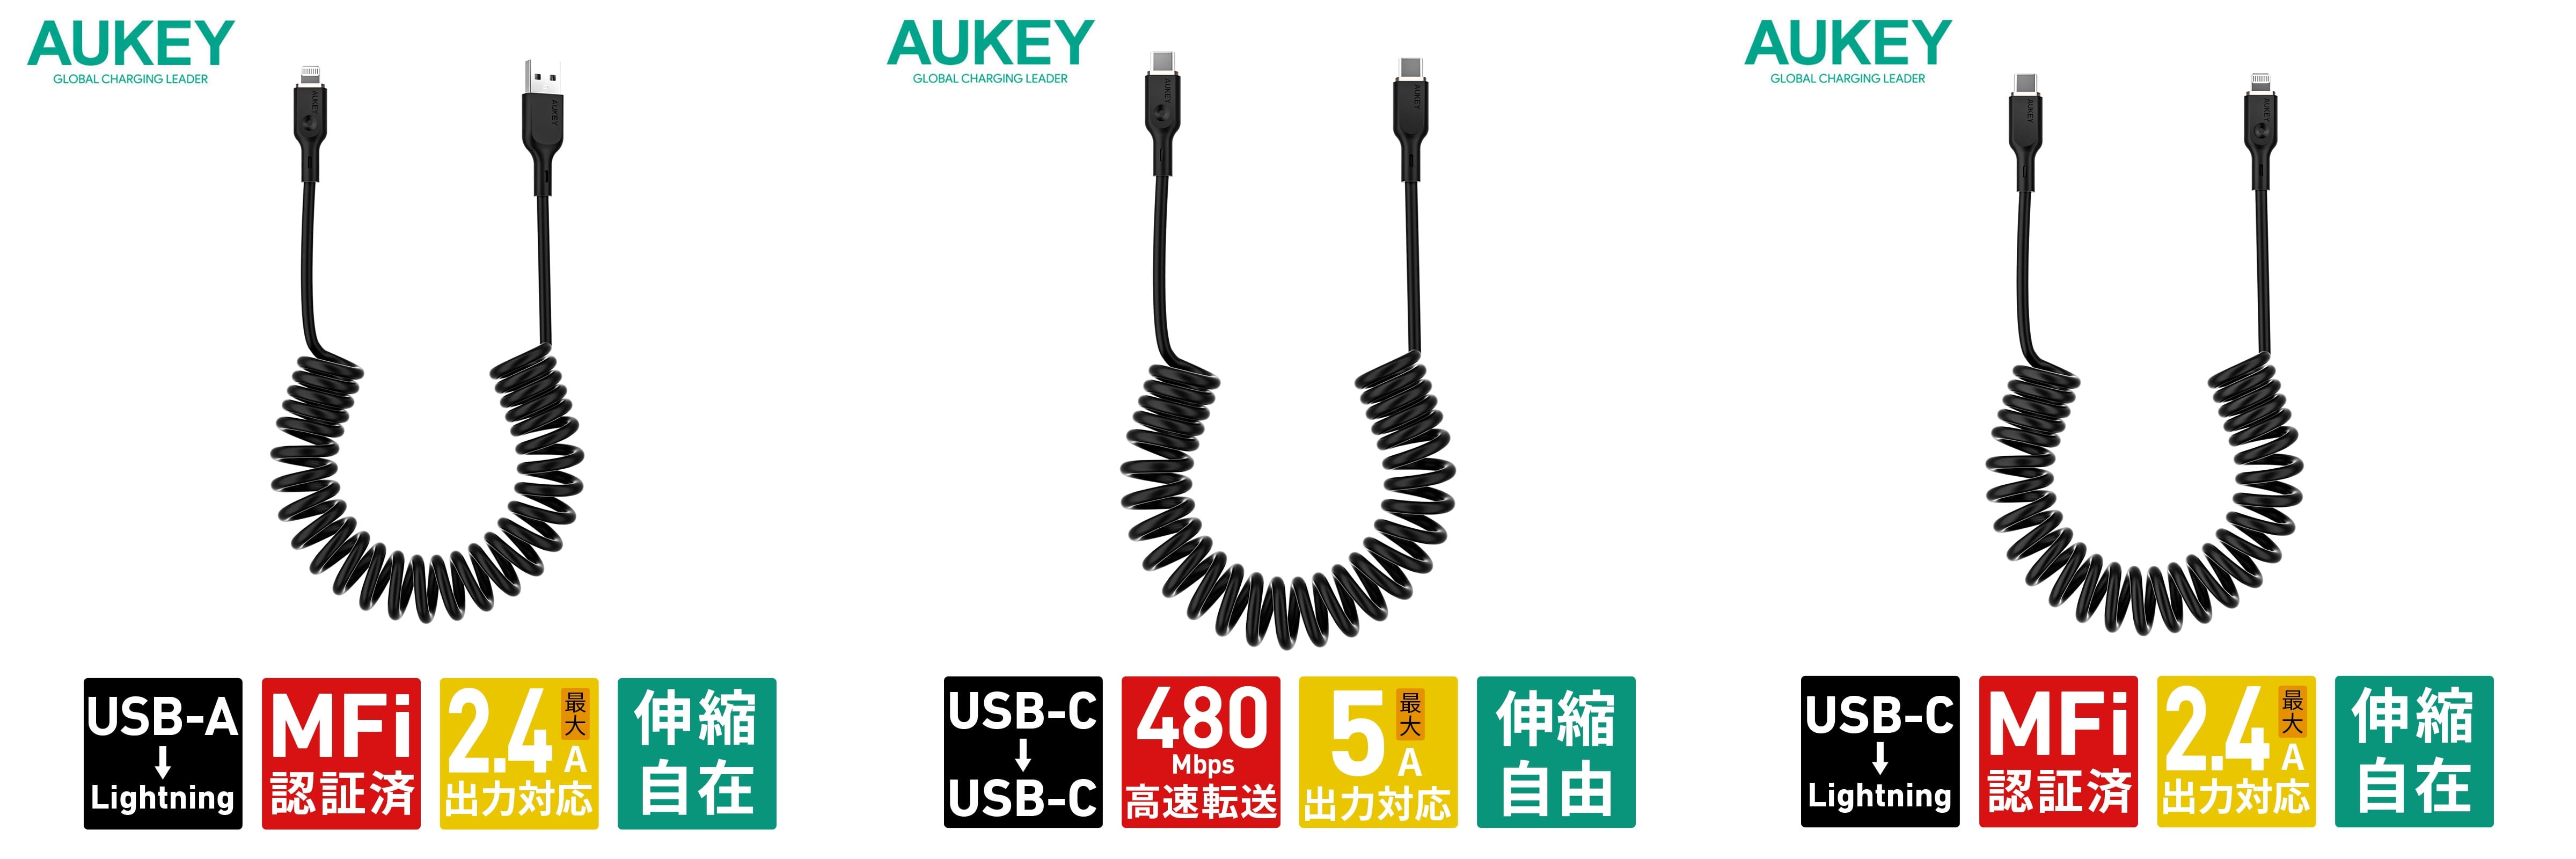 AUKEY、伸縮可能なコイル型USBケーブル3タイプを発売